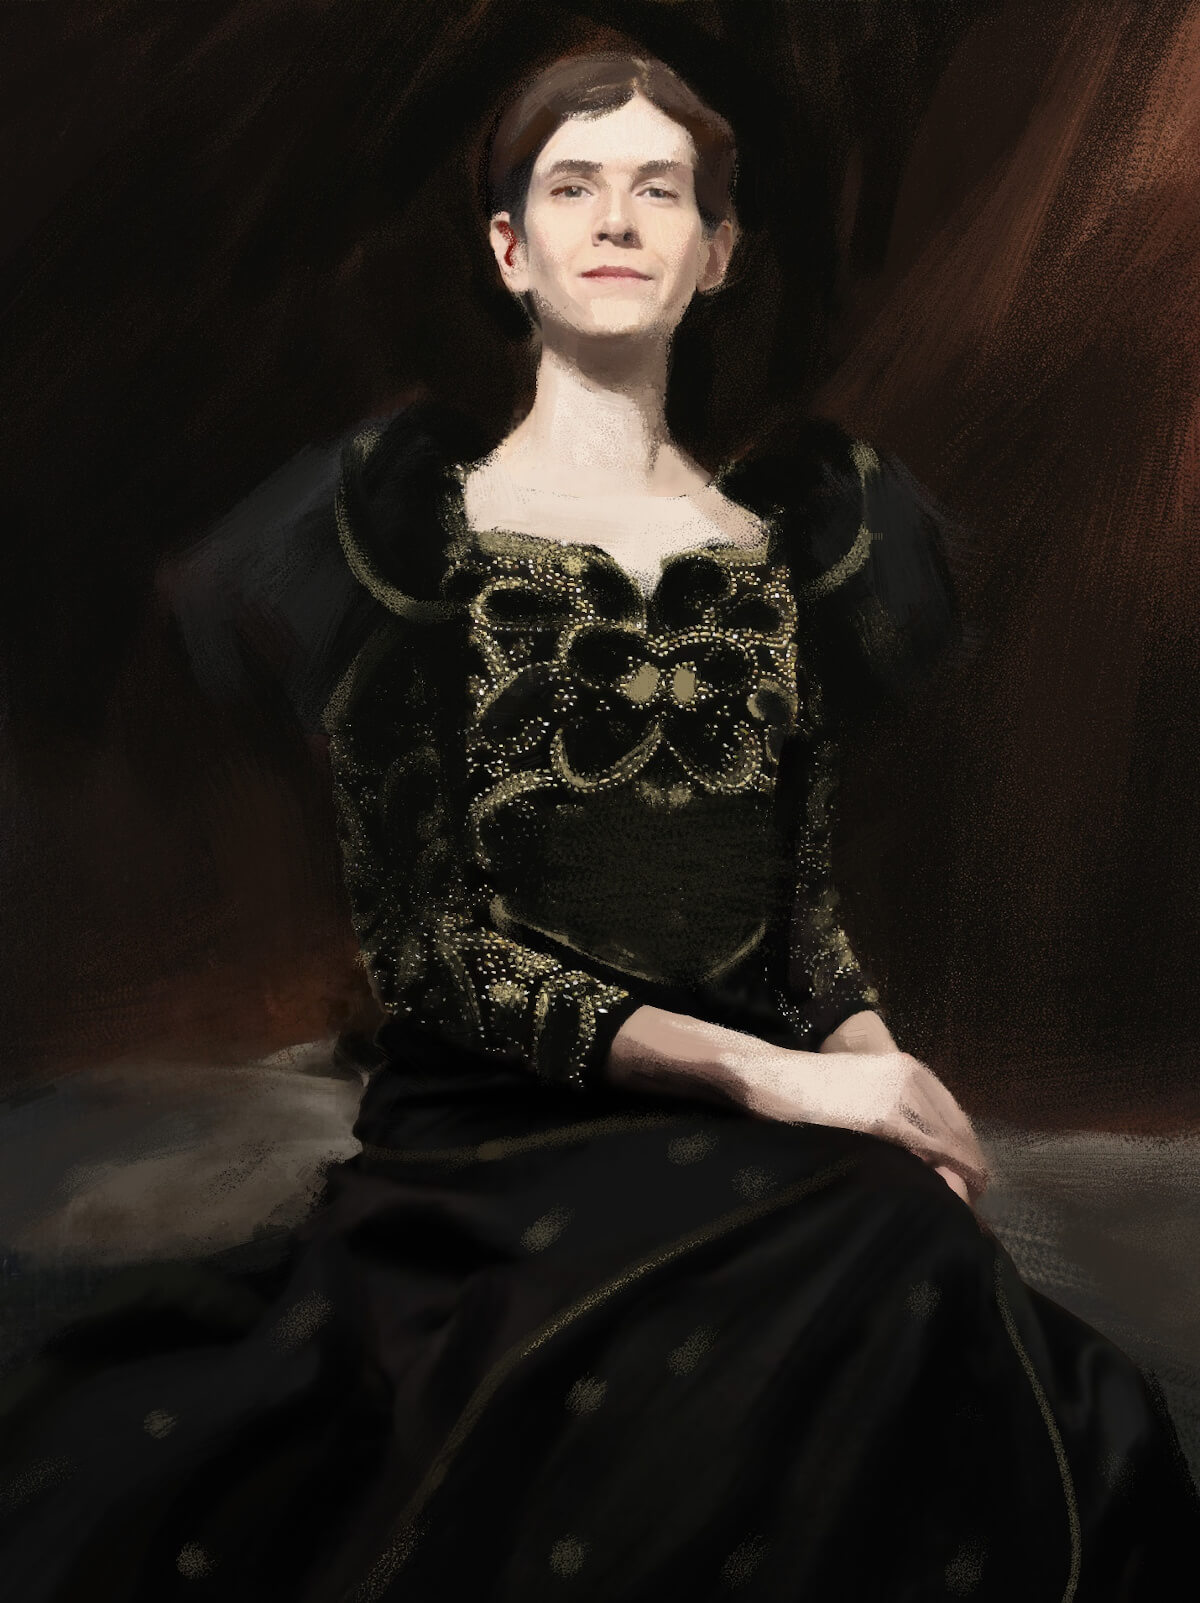 Digital portrait of Lucy Ainsworth